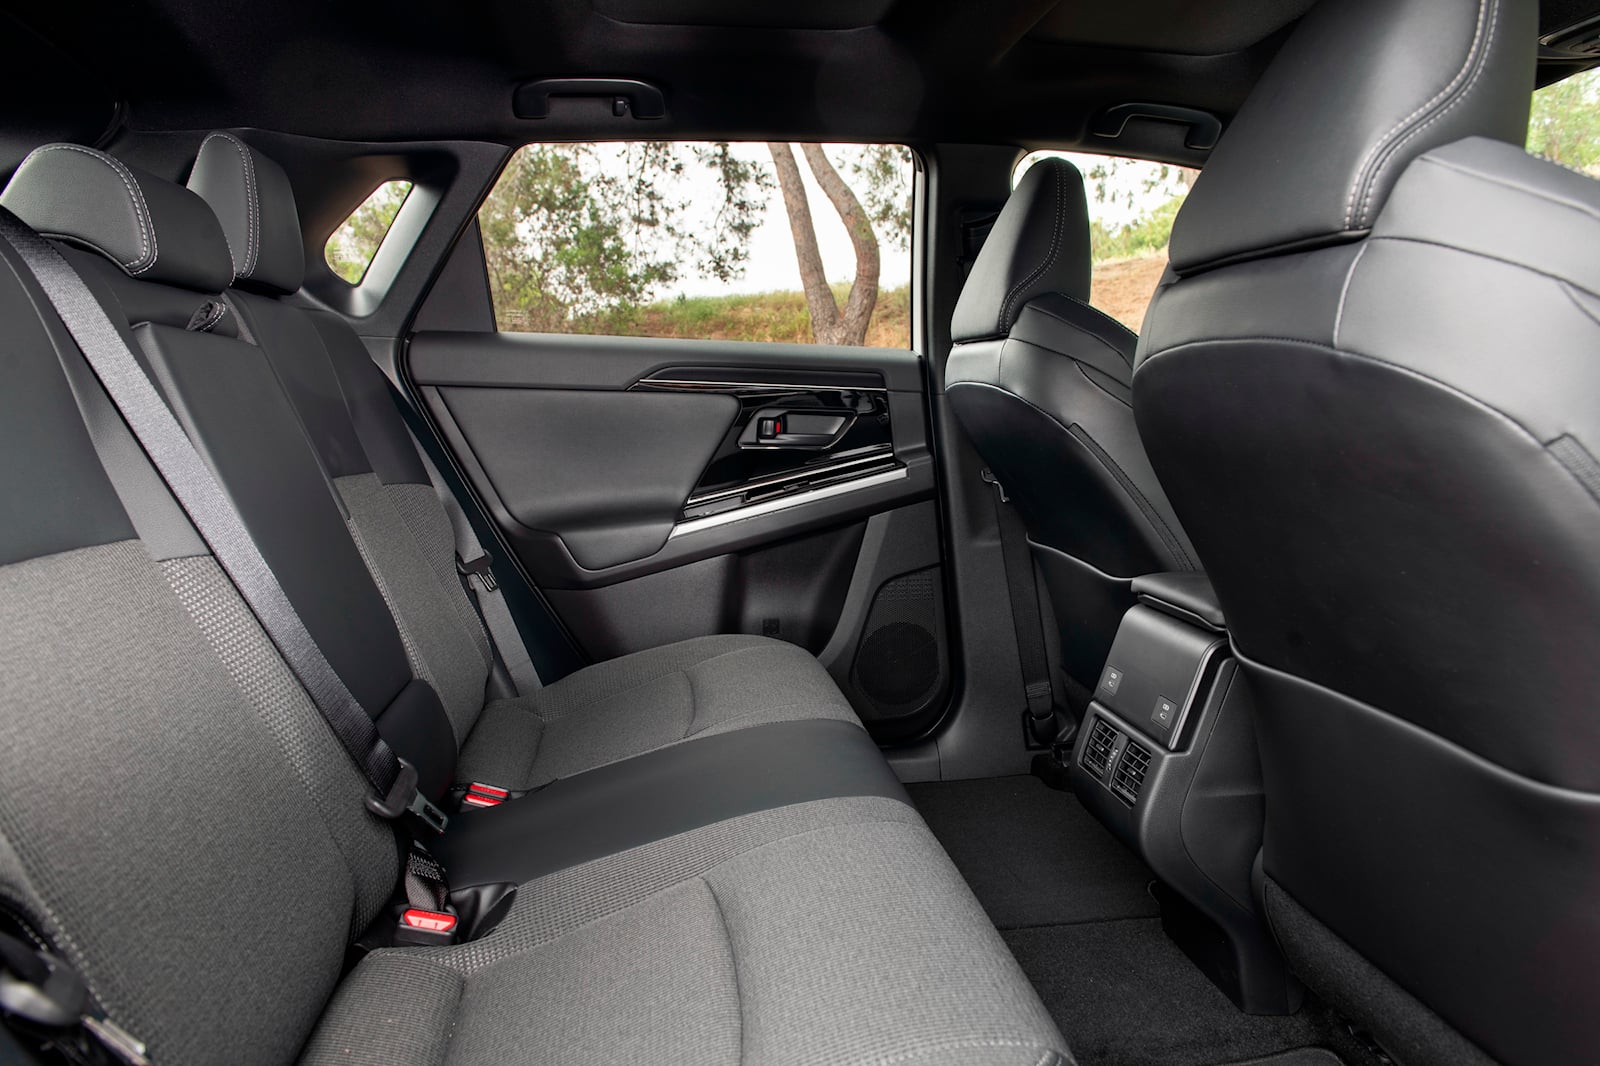 Toyota bZ4X interior - Seats